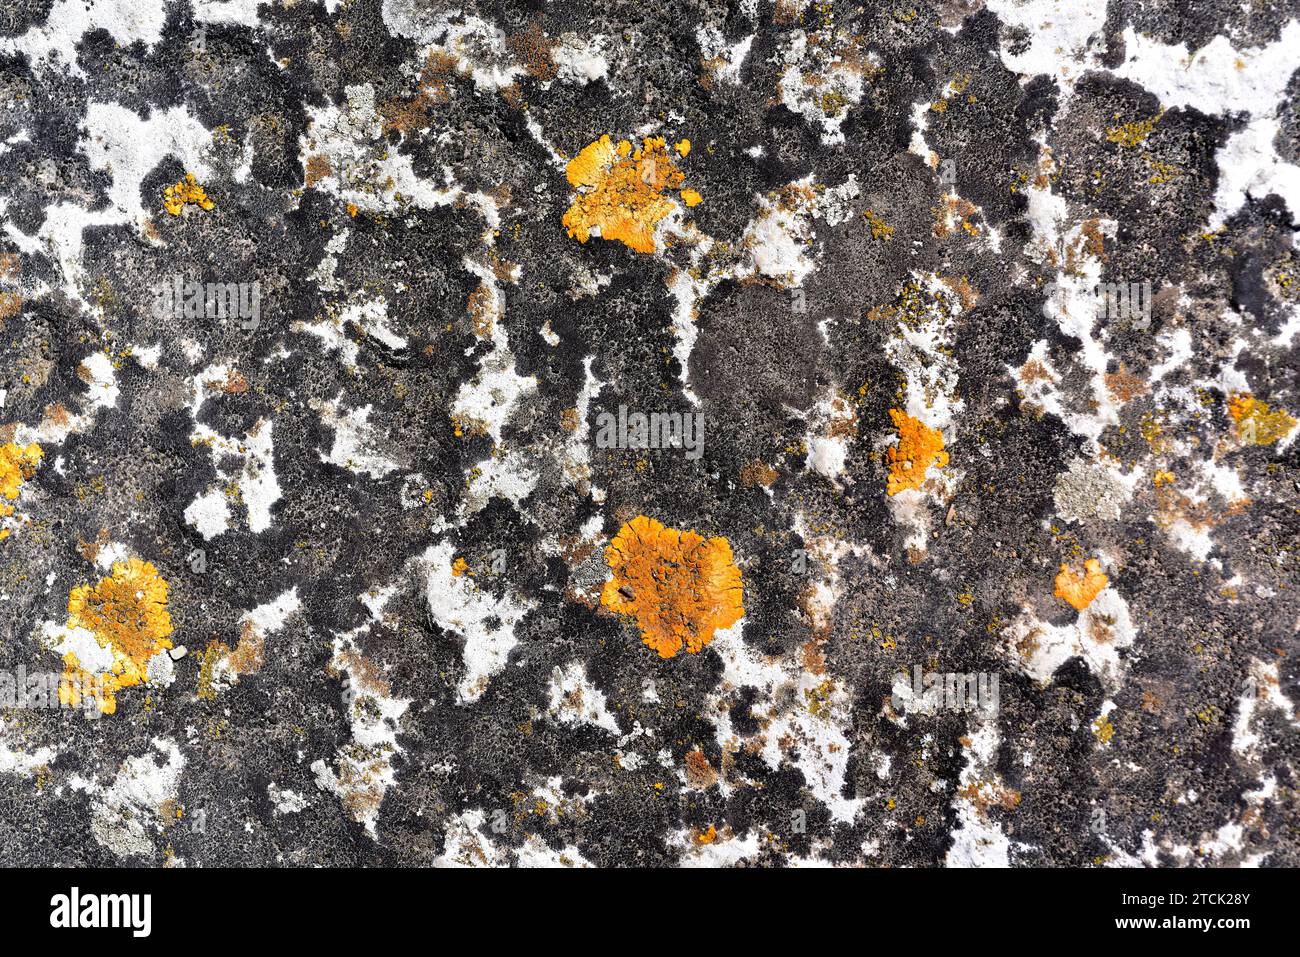 Crustose lichen community with Verrucaria nigrescens (black), Aspicilia calcarea (grey) and Xanthoria flavescens (orange) growing on a calcareous rock Stock Photo